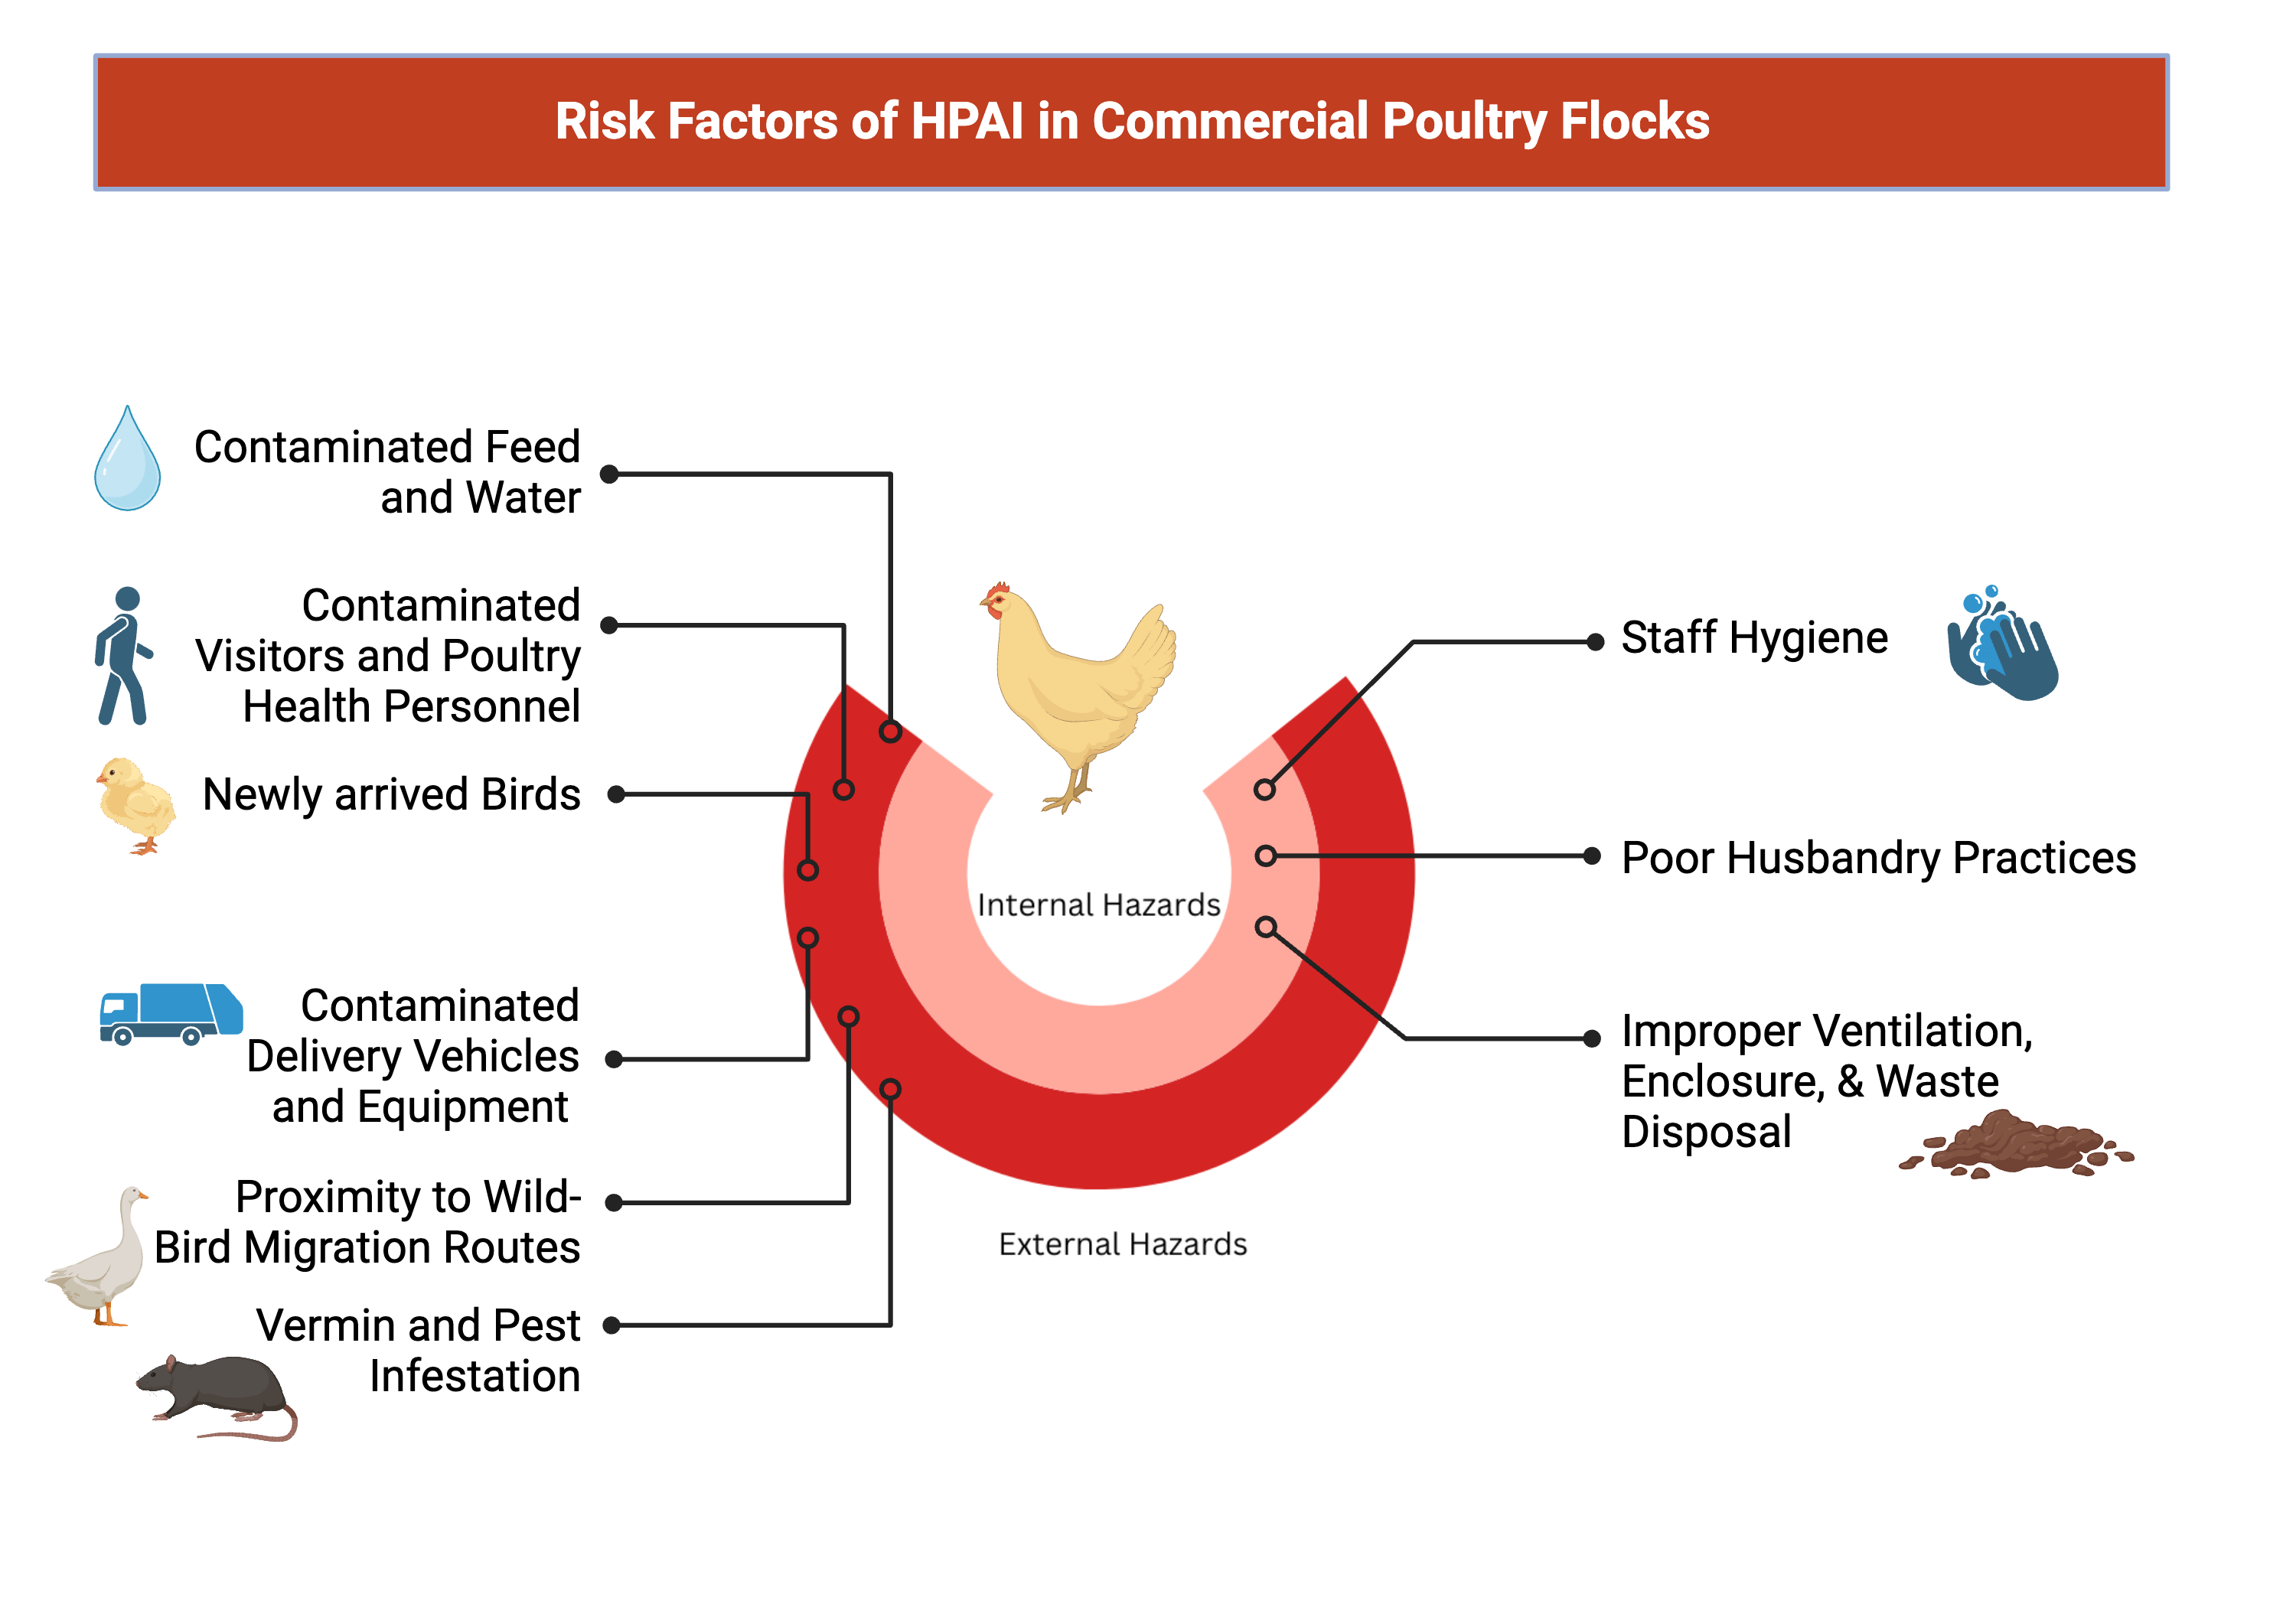 Risk factors of HPAI